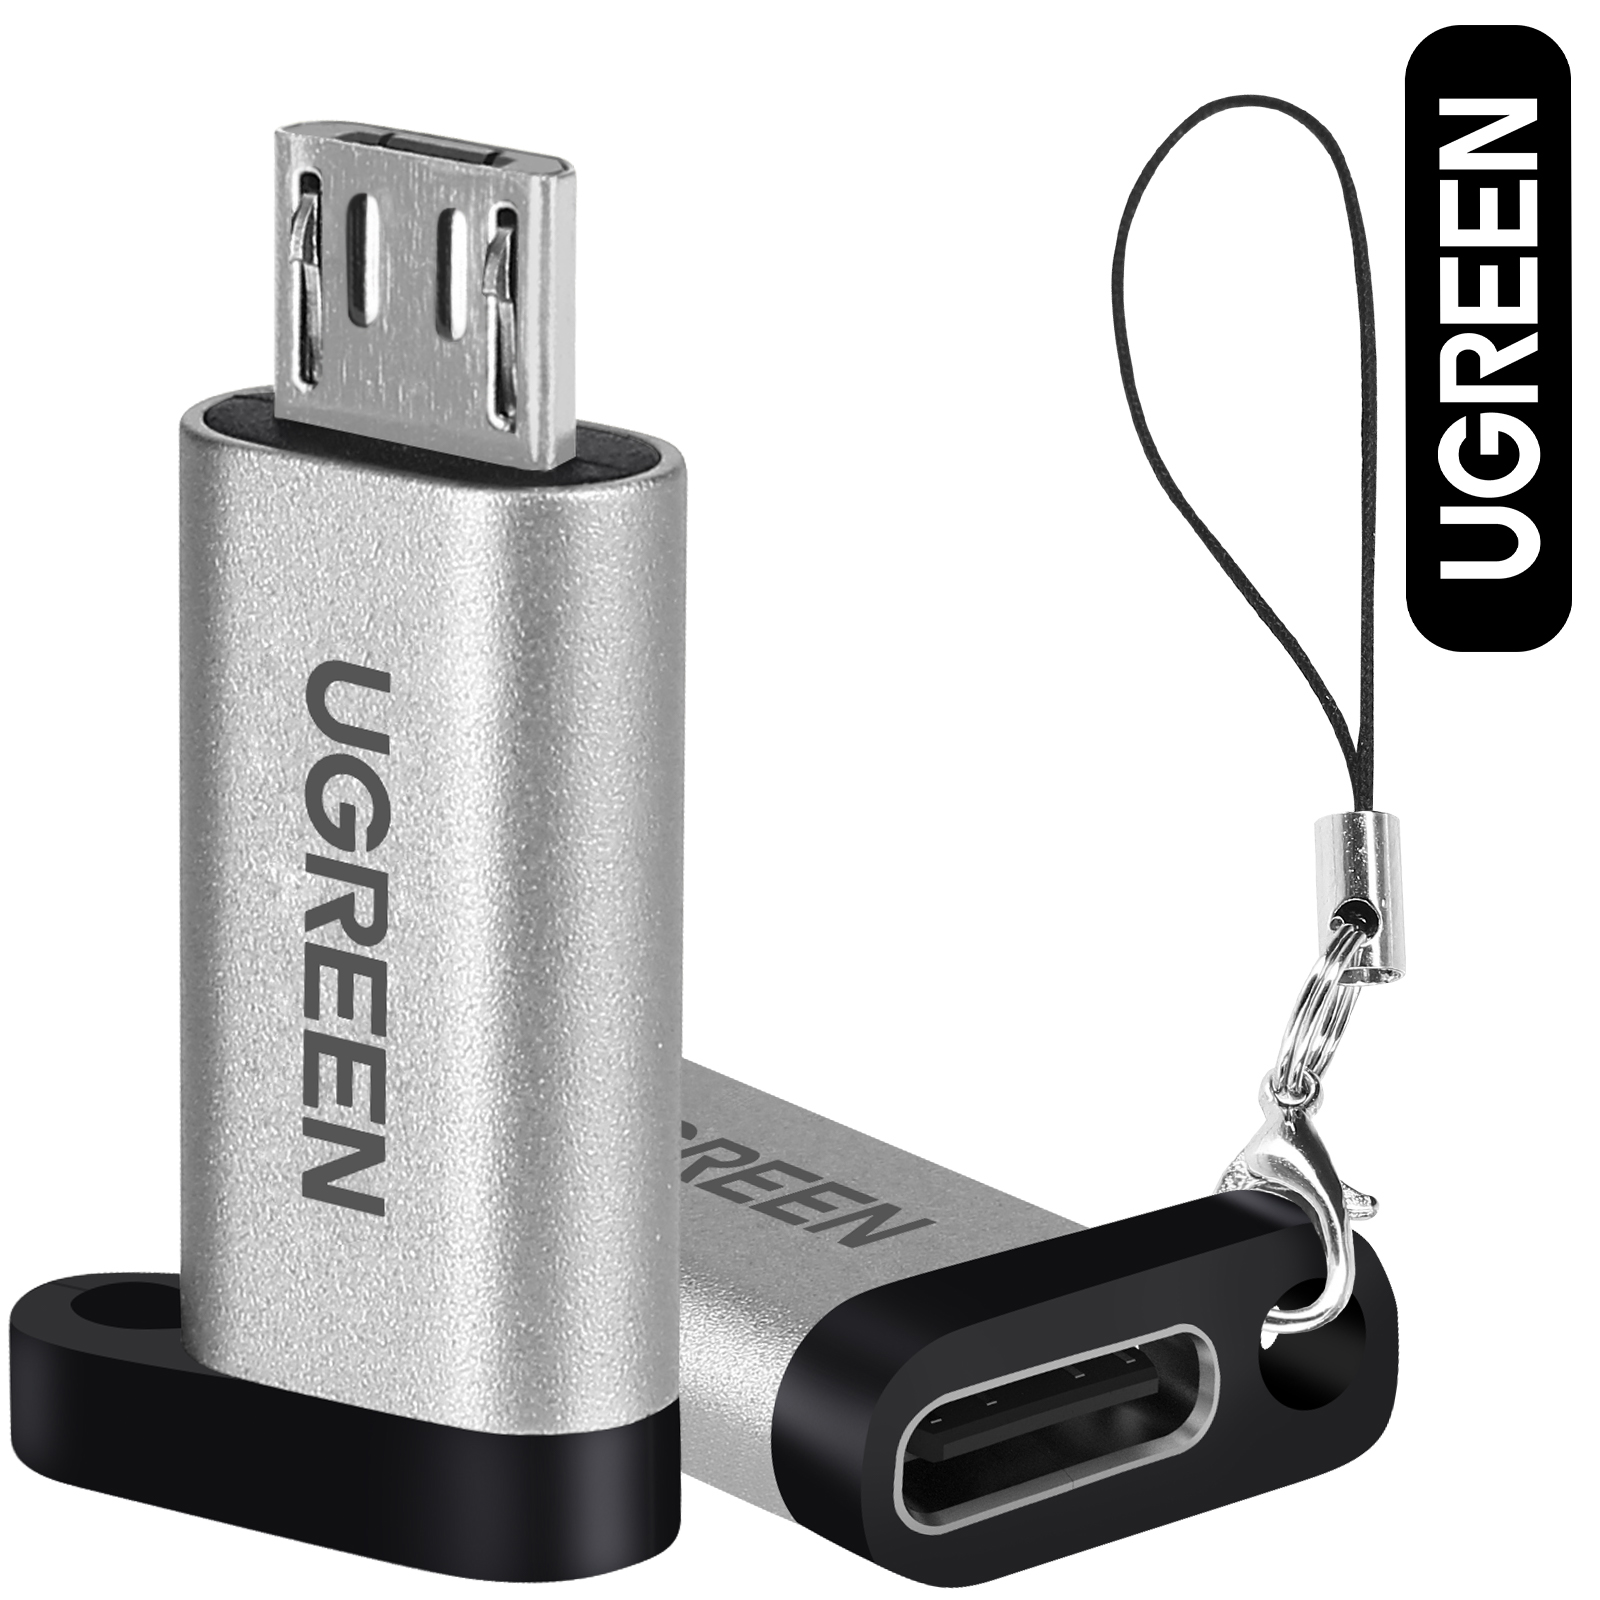 Adaptateur USB-C femelle vers Micro-USB mâle, Charge & Synchronisation,  Ugreen - Gris - Français